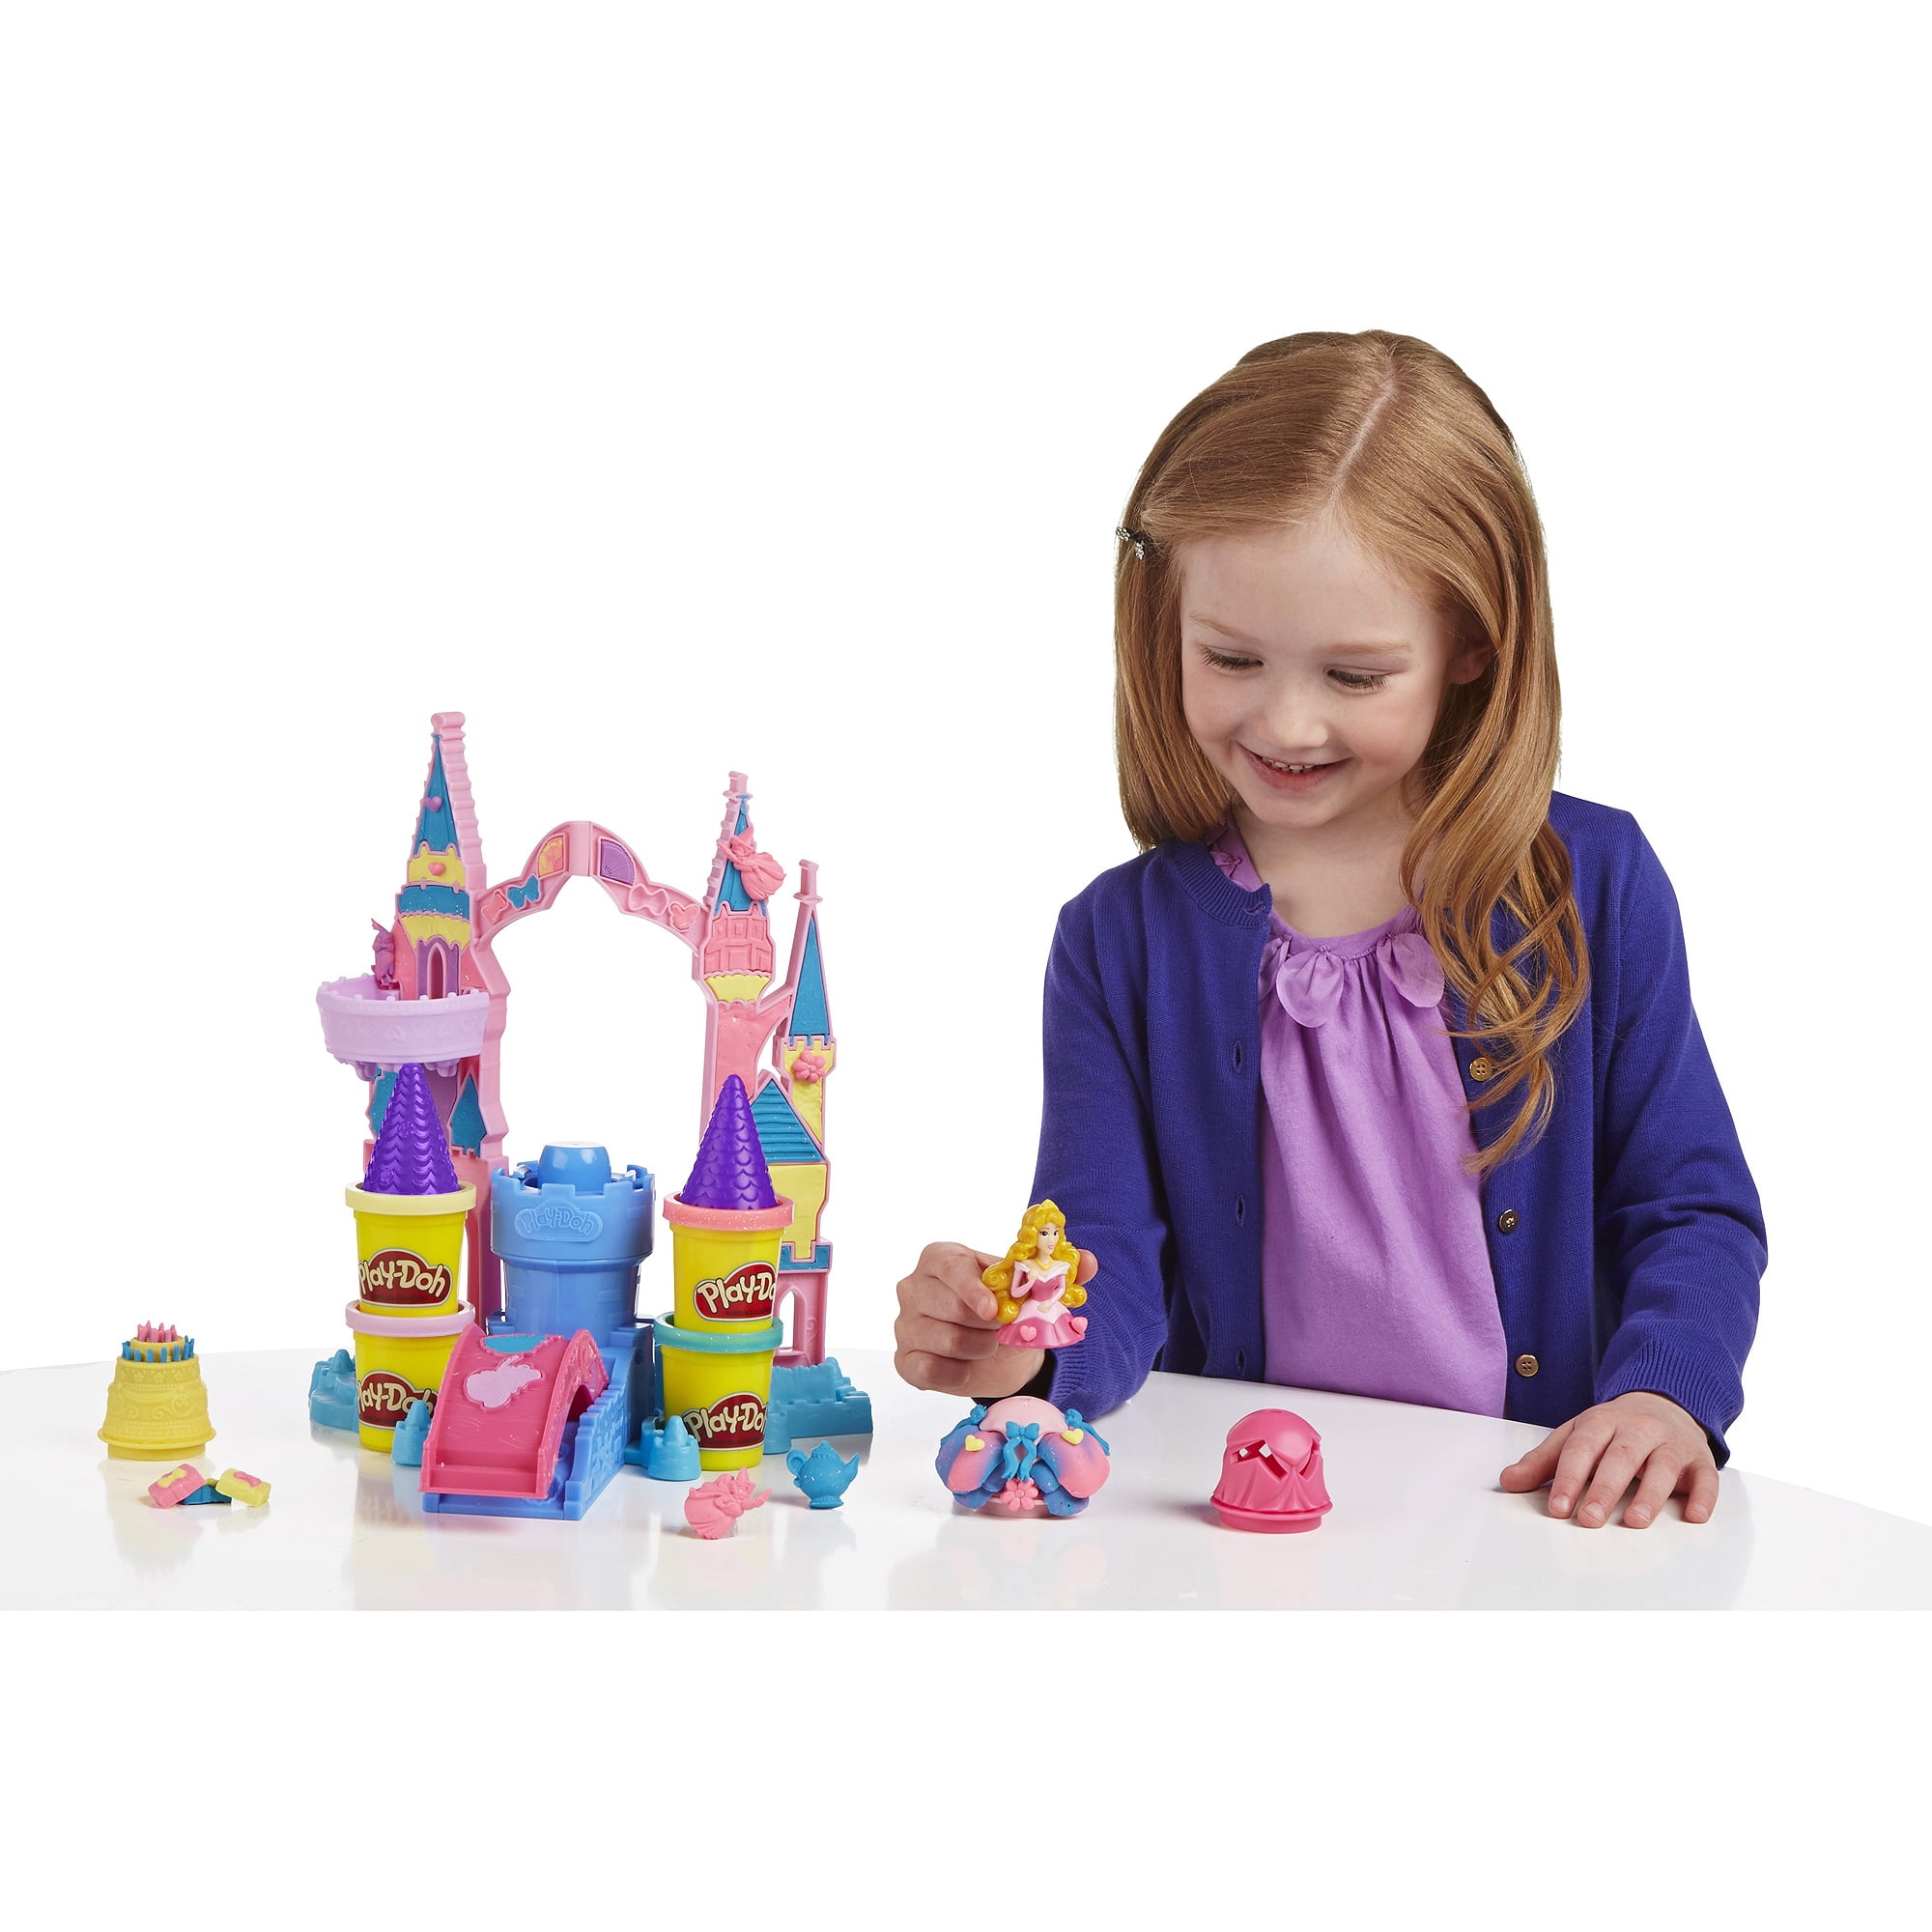 Play Dough Gift - Easily Assemble a Fun Princess Kit - 7 Days of Play